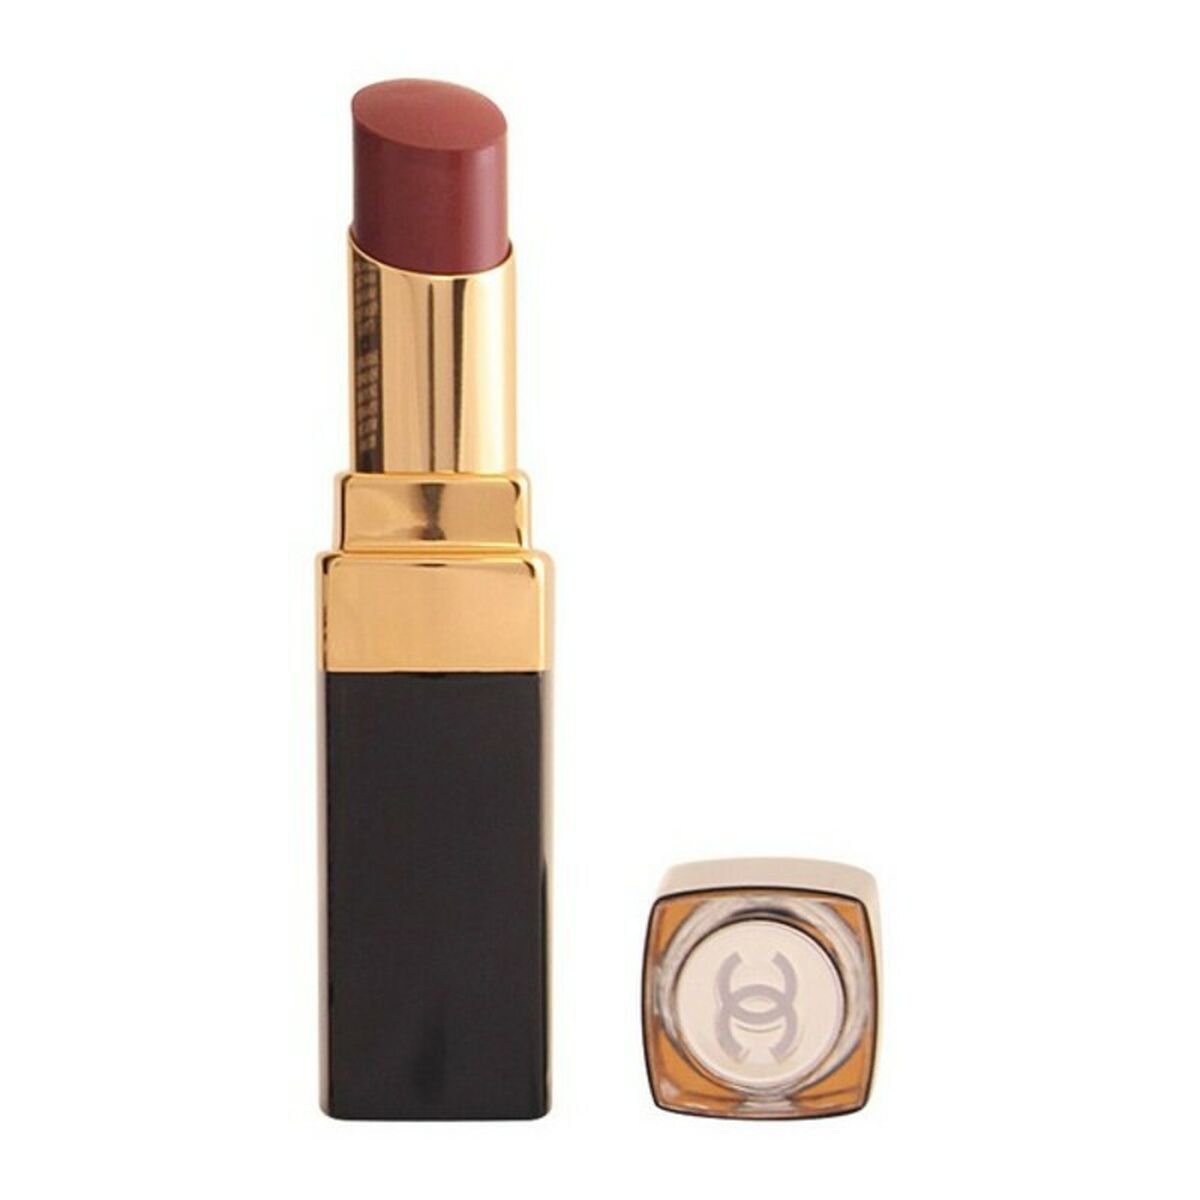 Lipstick Rouge Coco Chanel - JOSEPH BEAUTY